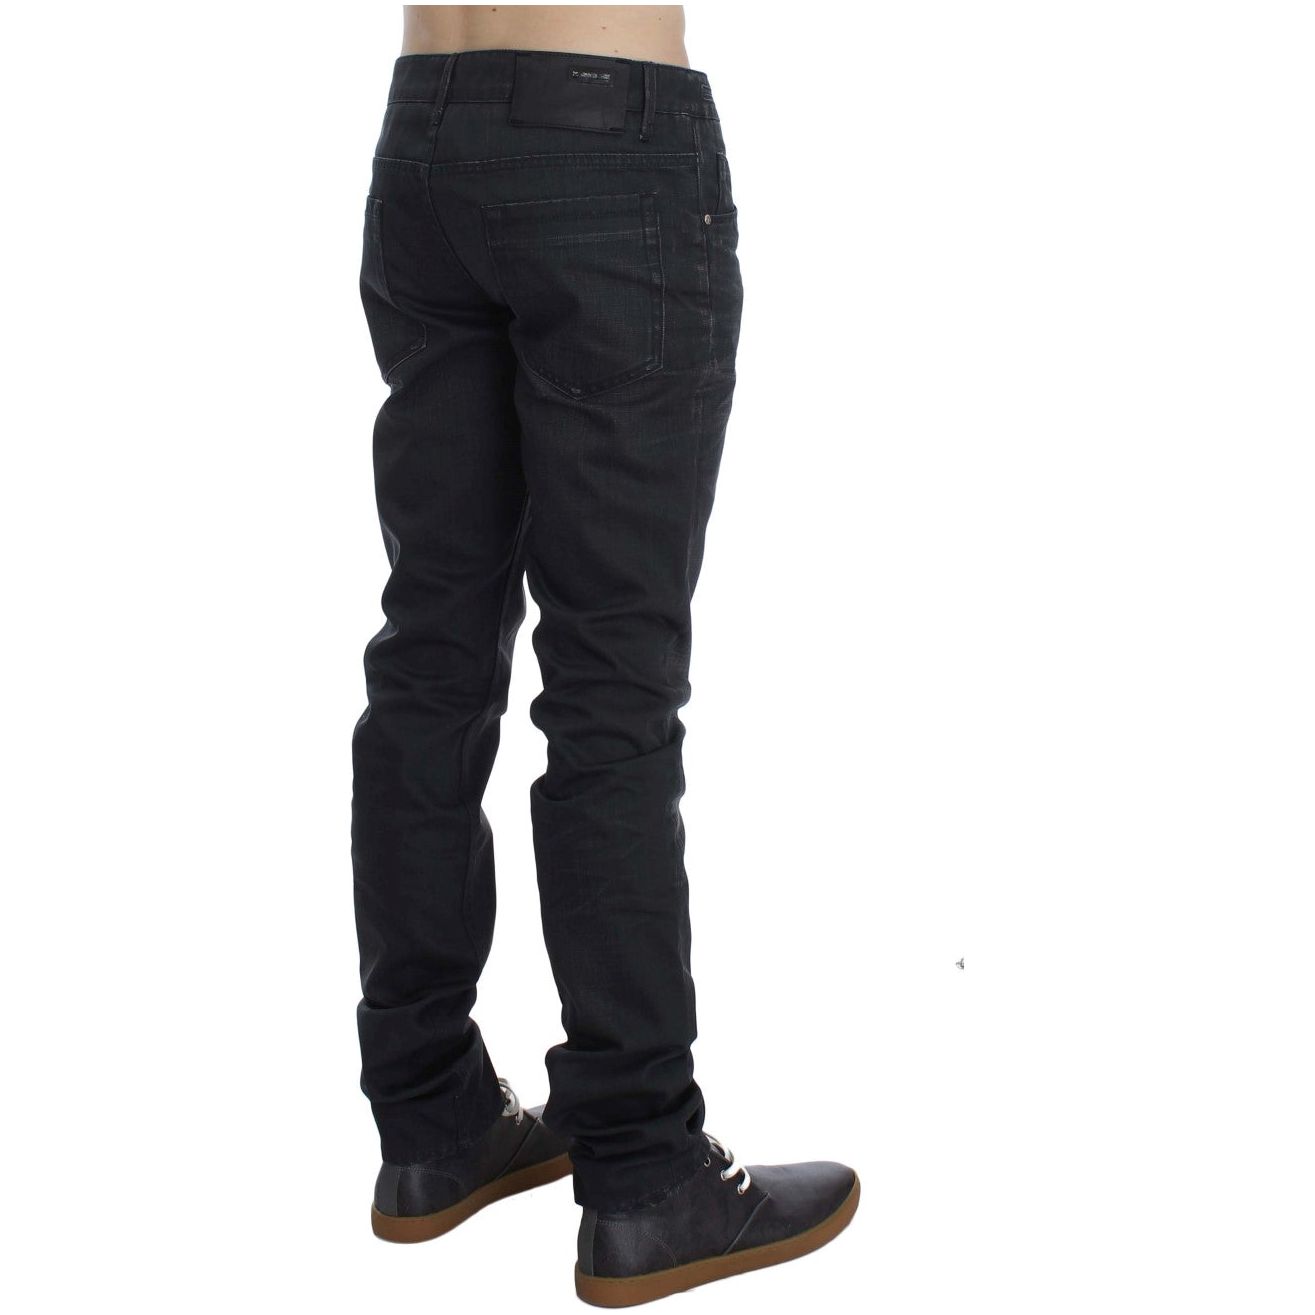 Acht Sleek Gray Slim Fit Italian Mens Jeans gray-cotton-skinny-slim-fit-jeans 298809-gray-cotton-skinny-slim-fit-jeans-3.jpg